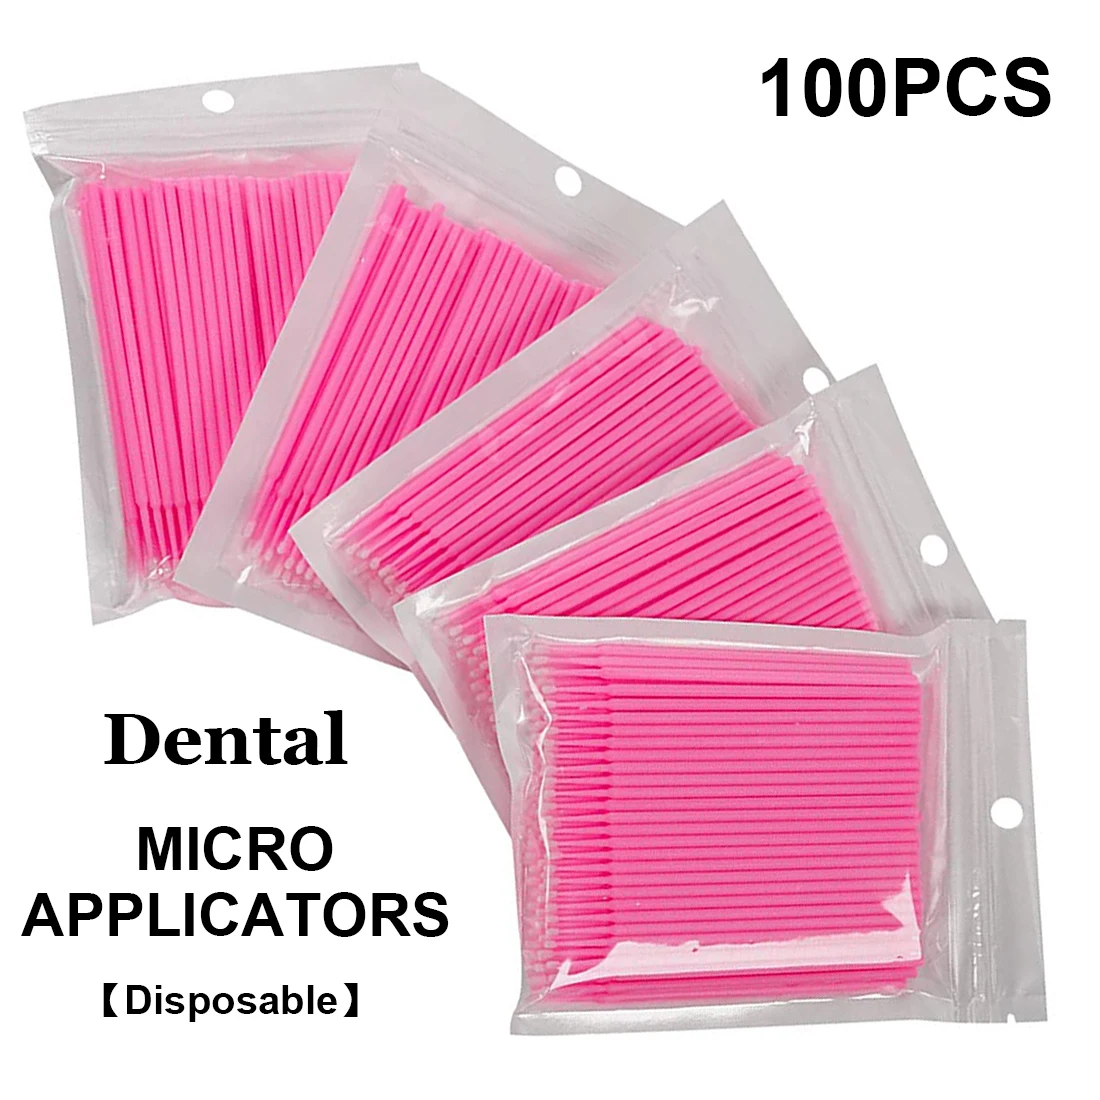 100PCS Dental Disposable Micro Applicator Brush Cotton Swab Eyelash Extension Tools makeup applicator remove tool